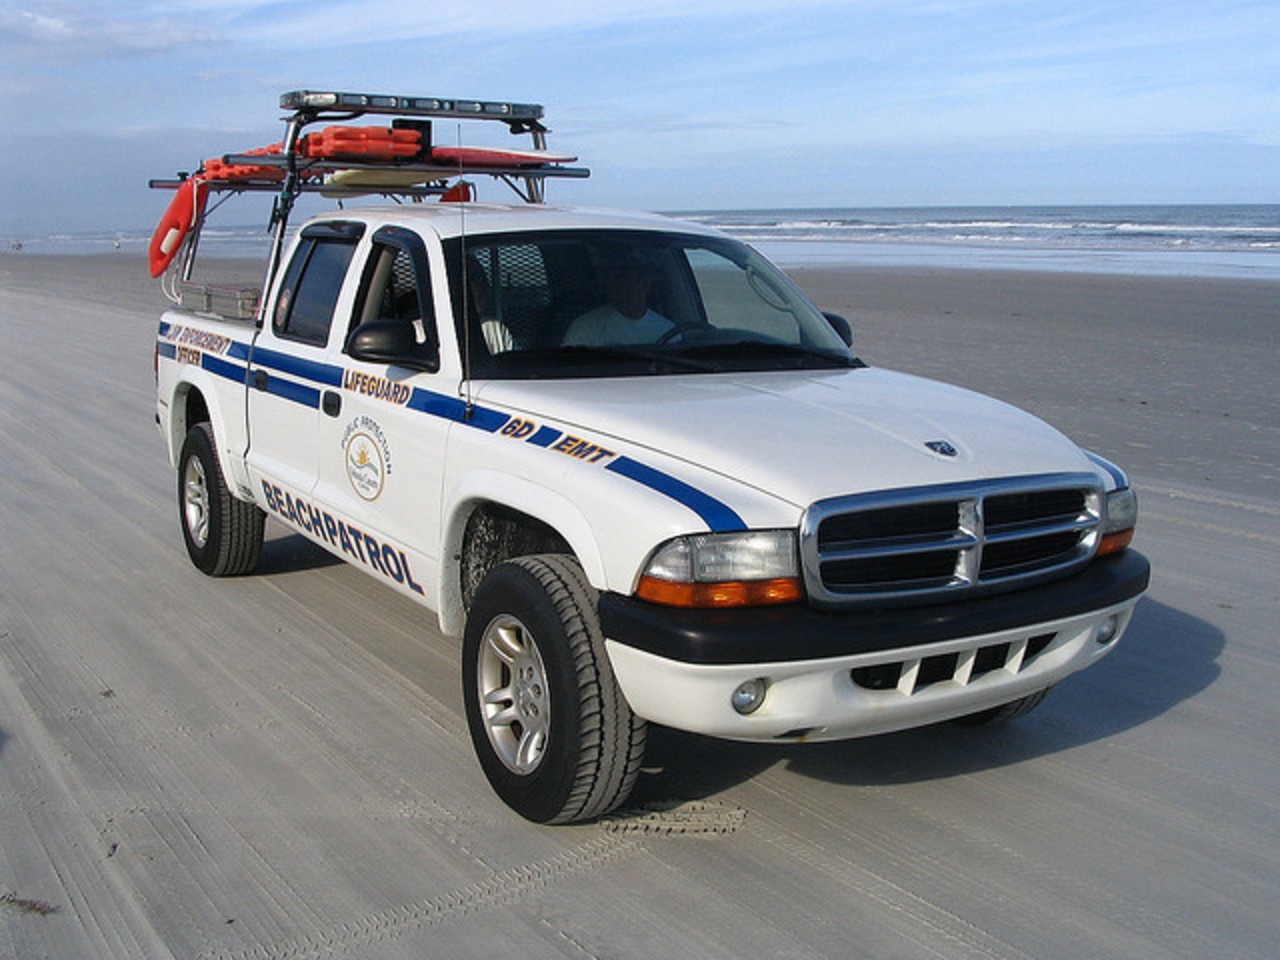 New Smyrna Beach Patrol | Flickr - Photo Sharing!